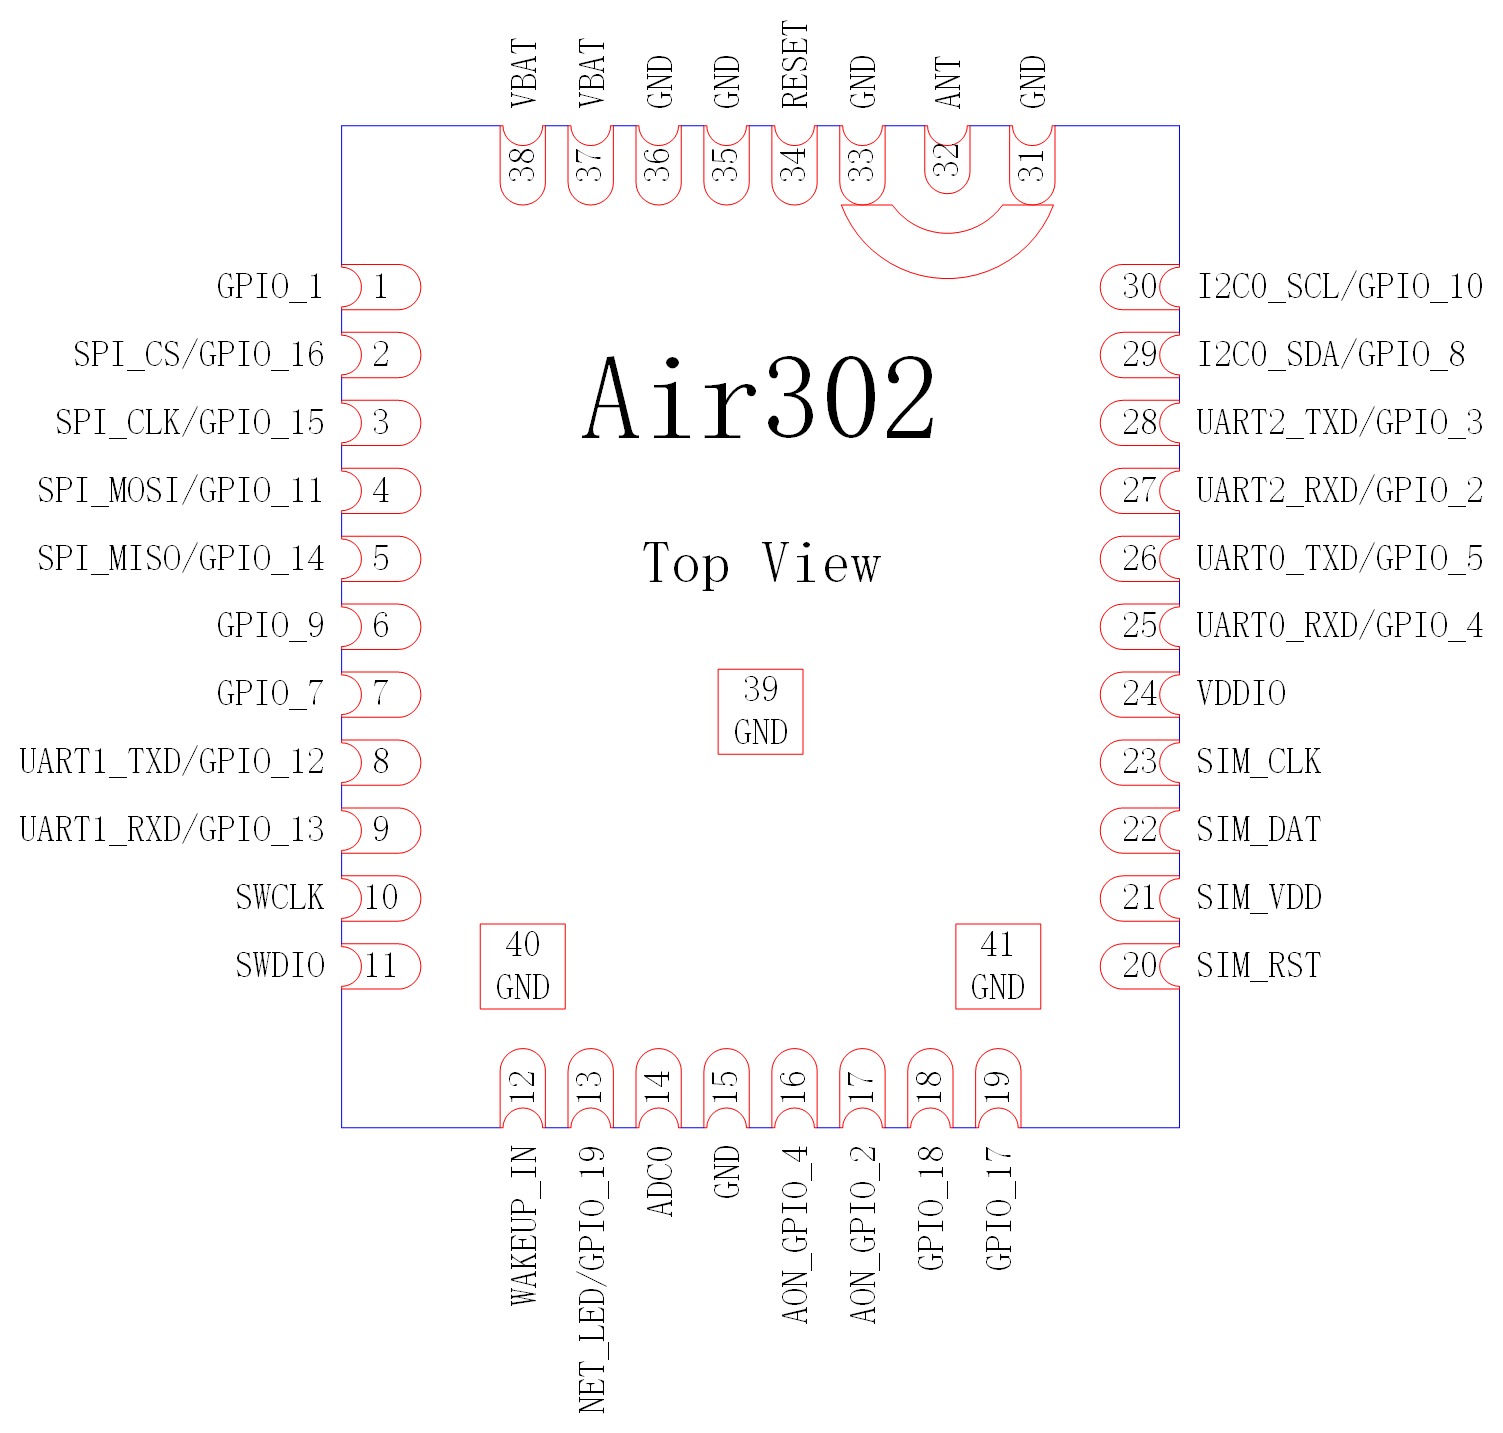 Air302模块硬件设计手册V1.3